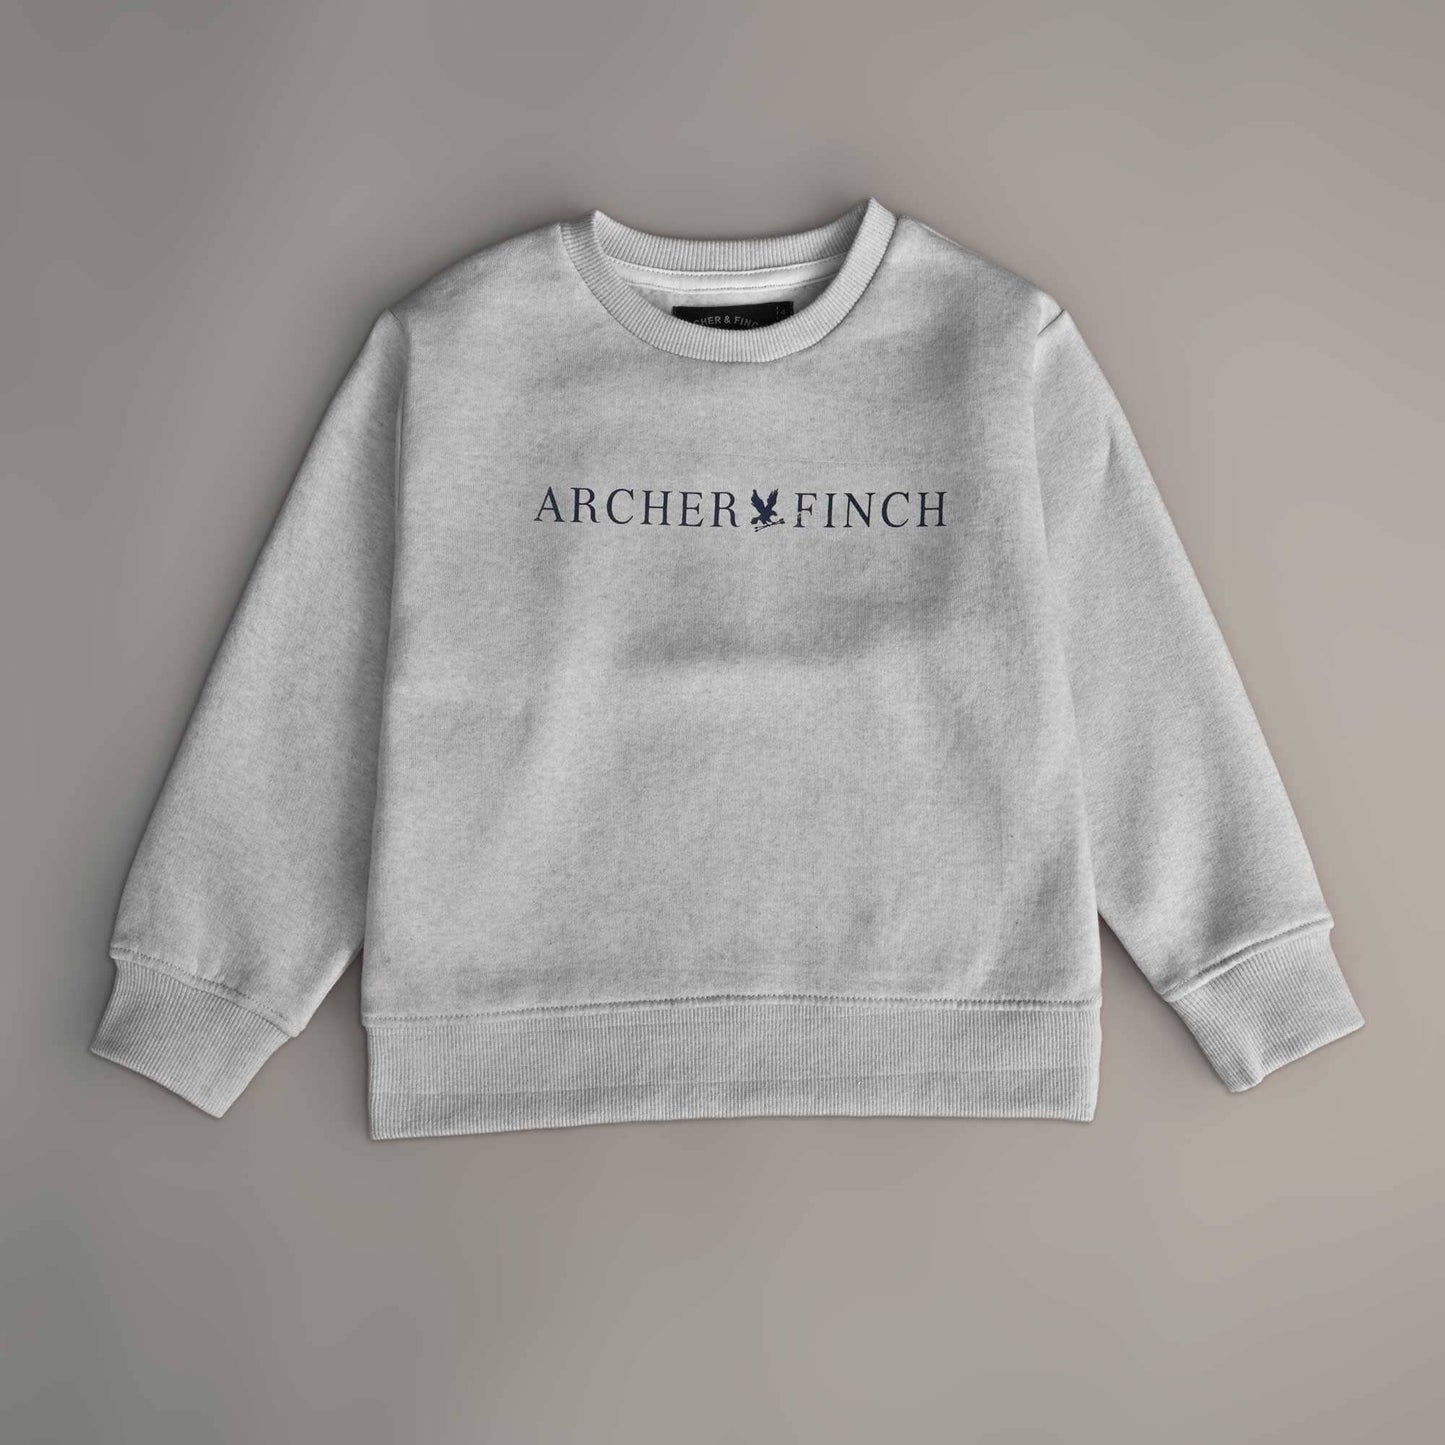 A&F Boy's Archer & Finch Printed Fleece Sweat Shirt Boy's Sweat Shirt LFS Grey 3-4 Years 